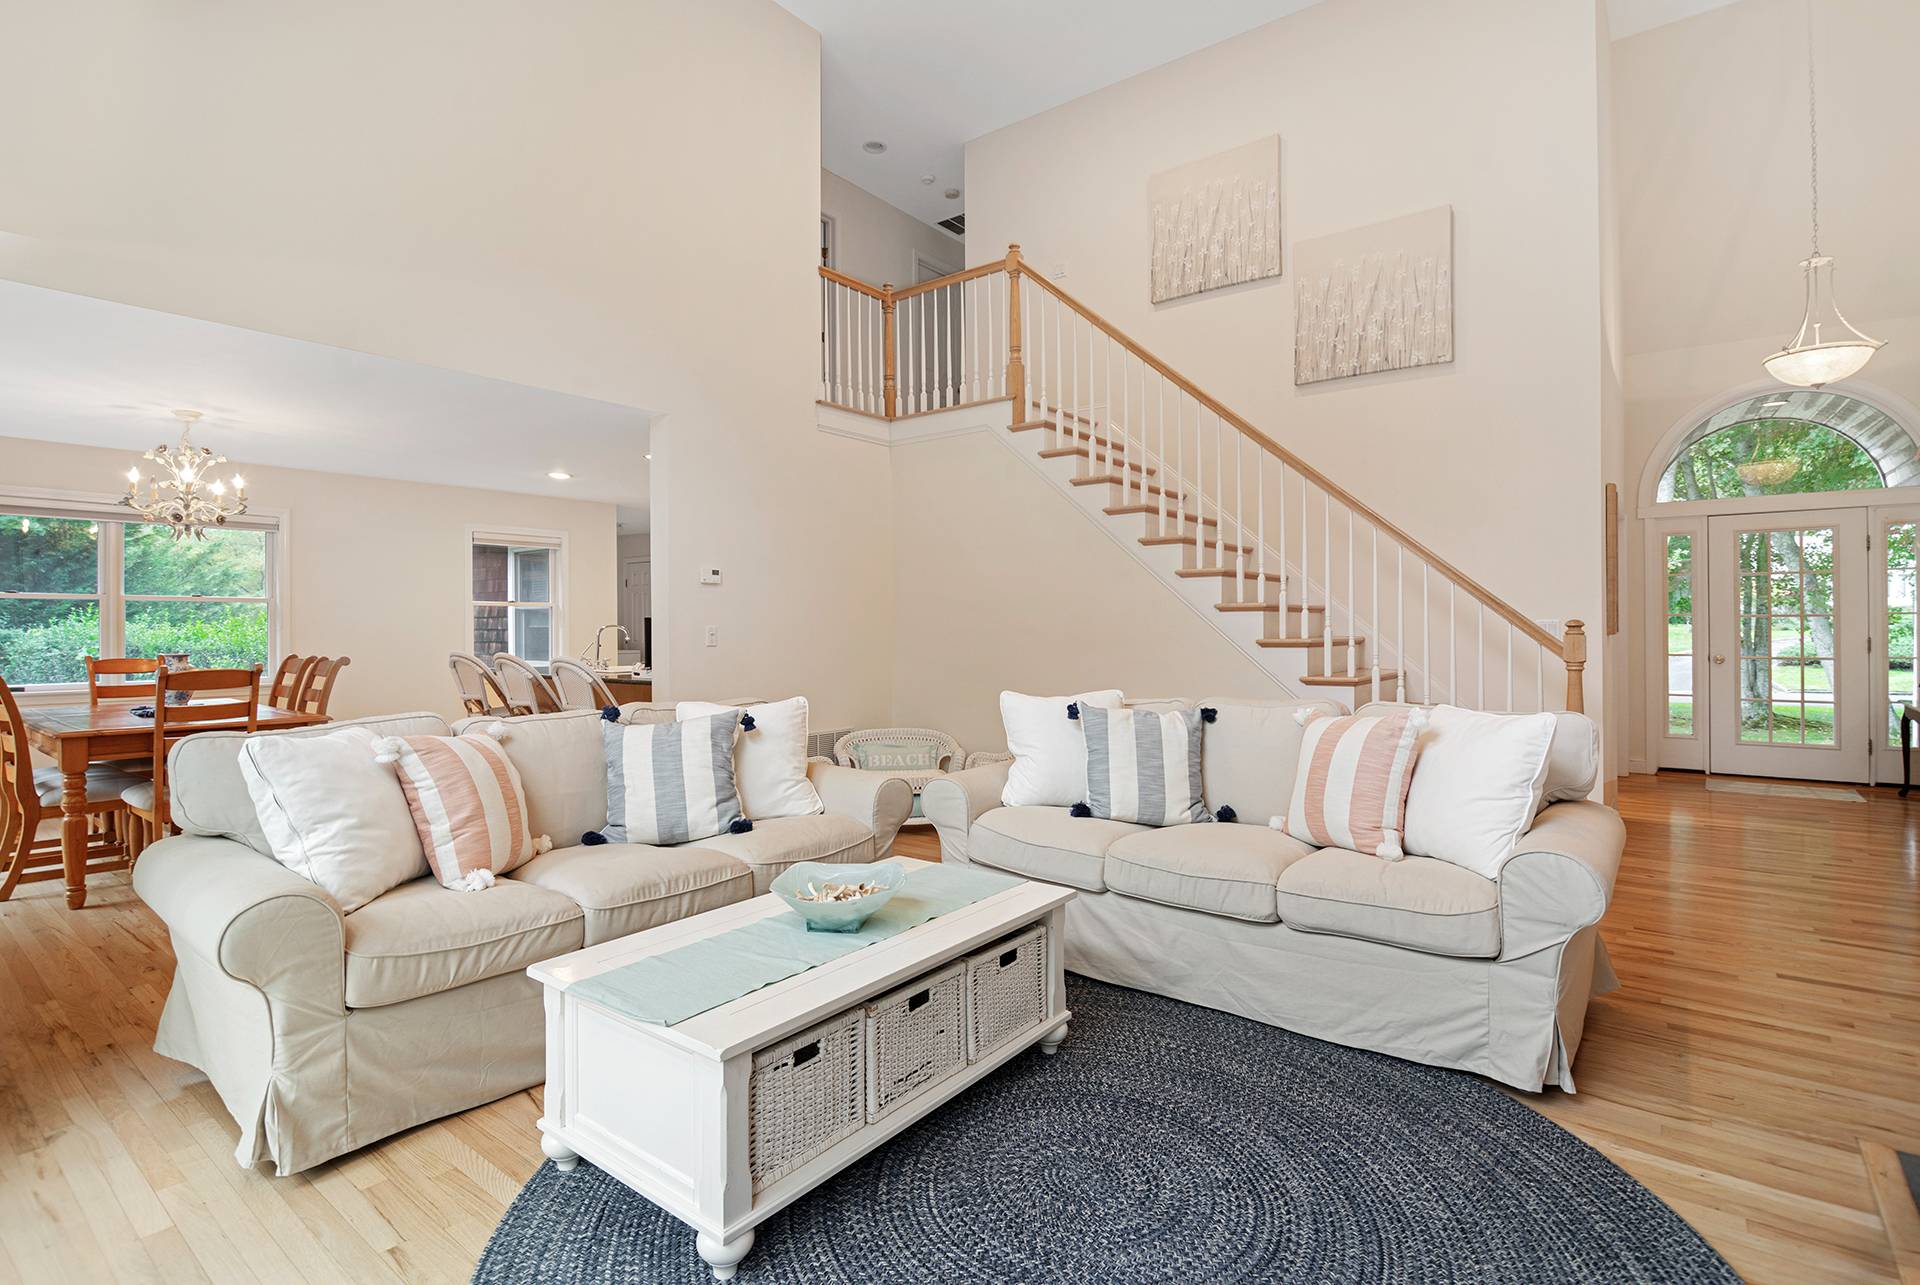 Rental Property at Southampton, Southampton, Hamptons, NY - Bedrooms: 4 
Bathrooms: 3  - $27,500 MO.